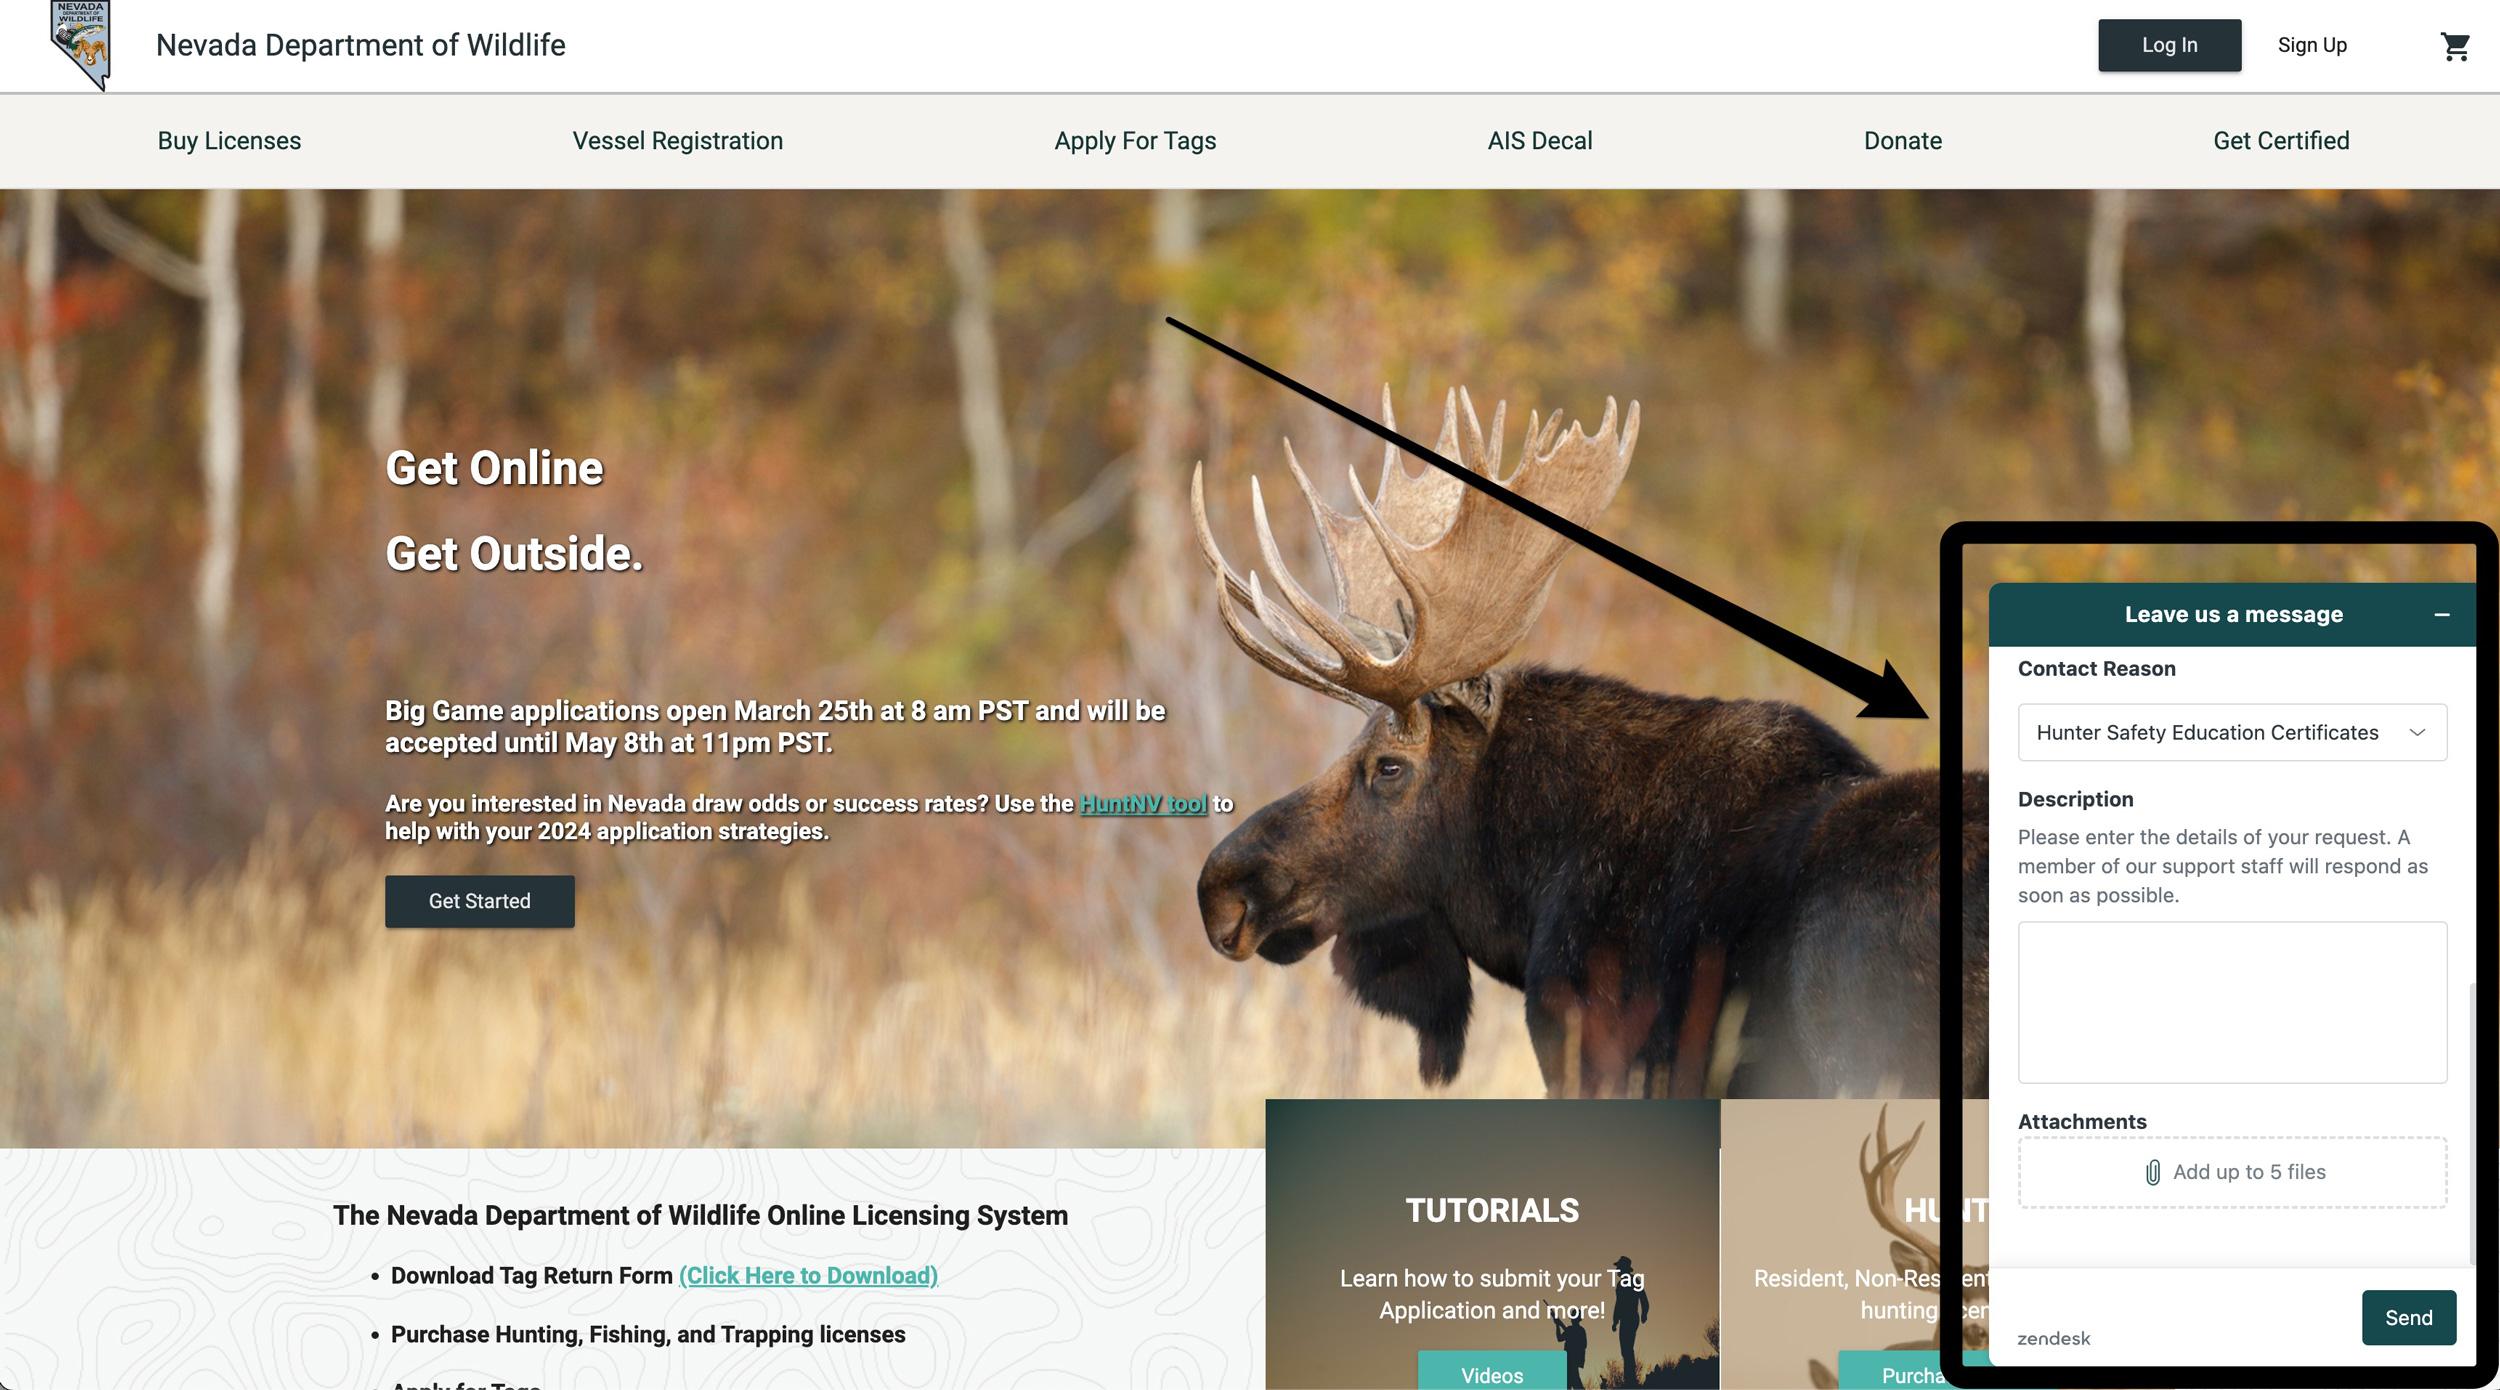 Uploading proof of Nevada hunter education certificate to Nevada licensing website